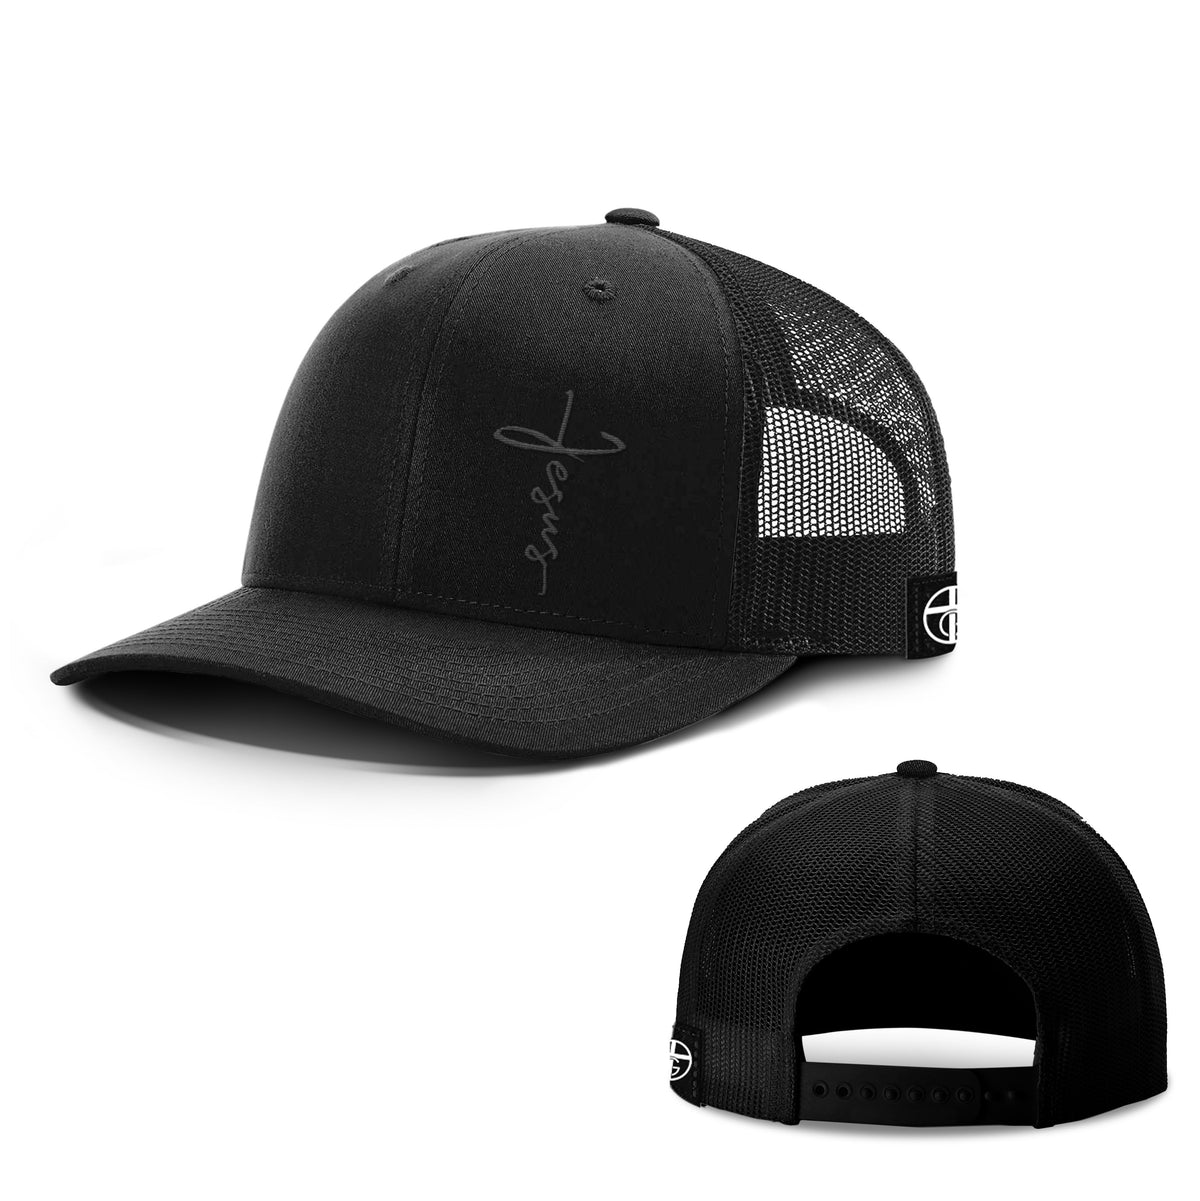 Jesus Cross Lower Left Blackout Version Hats